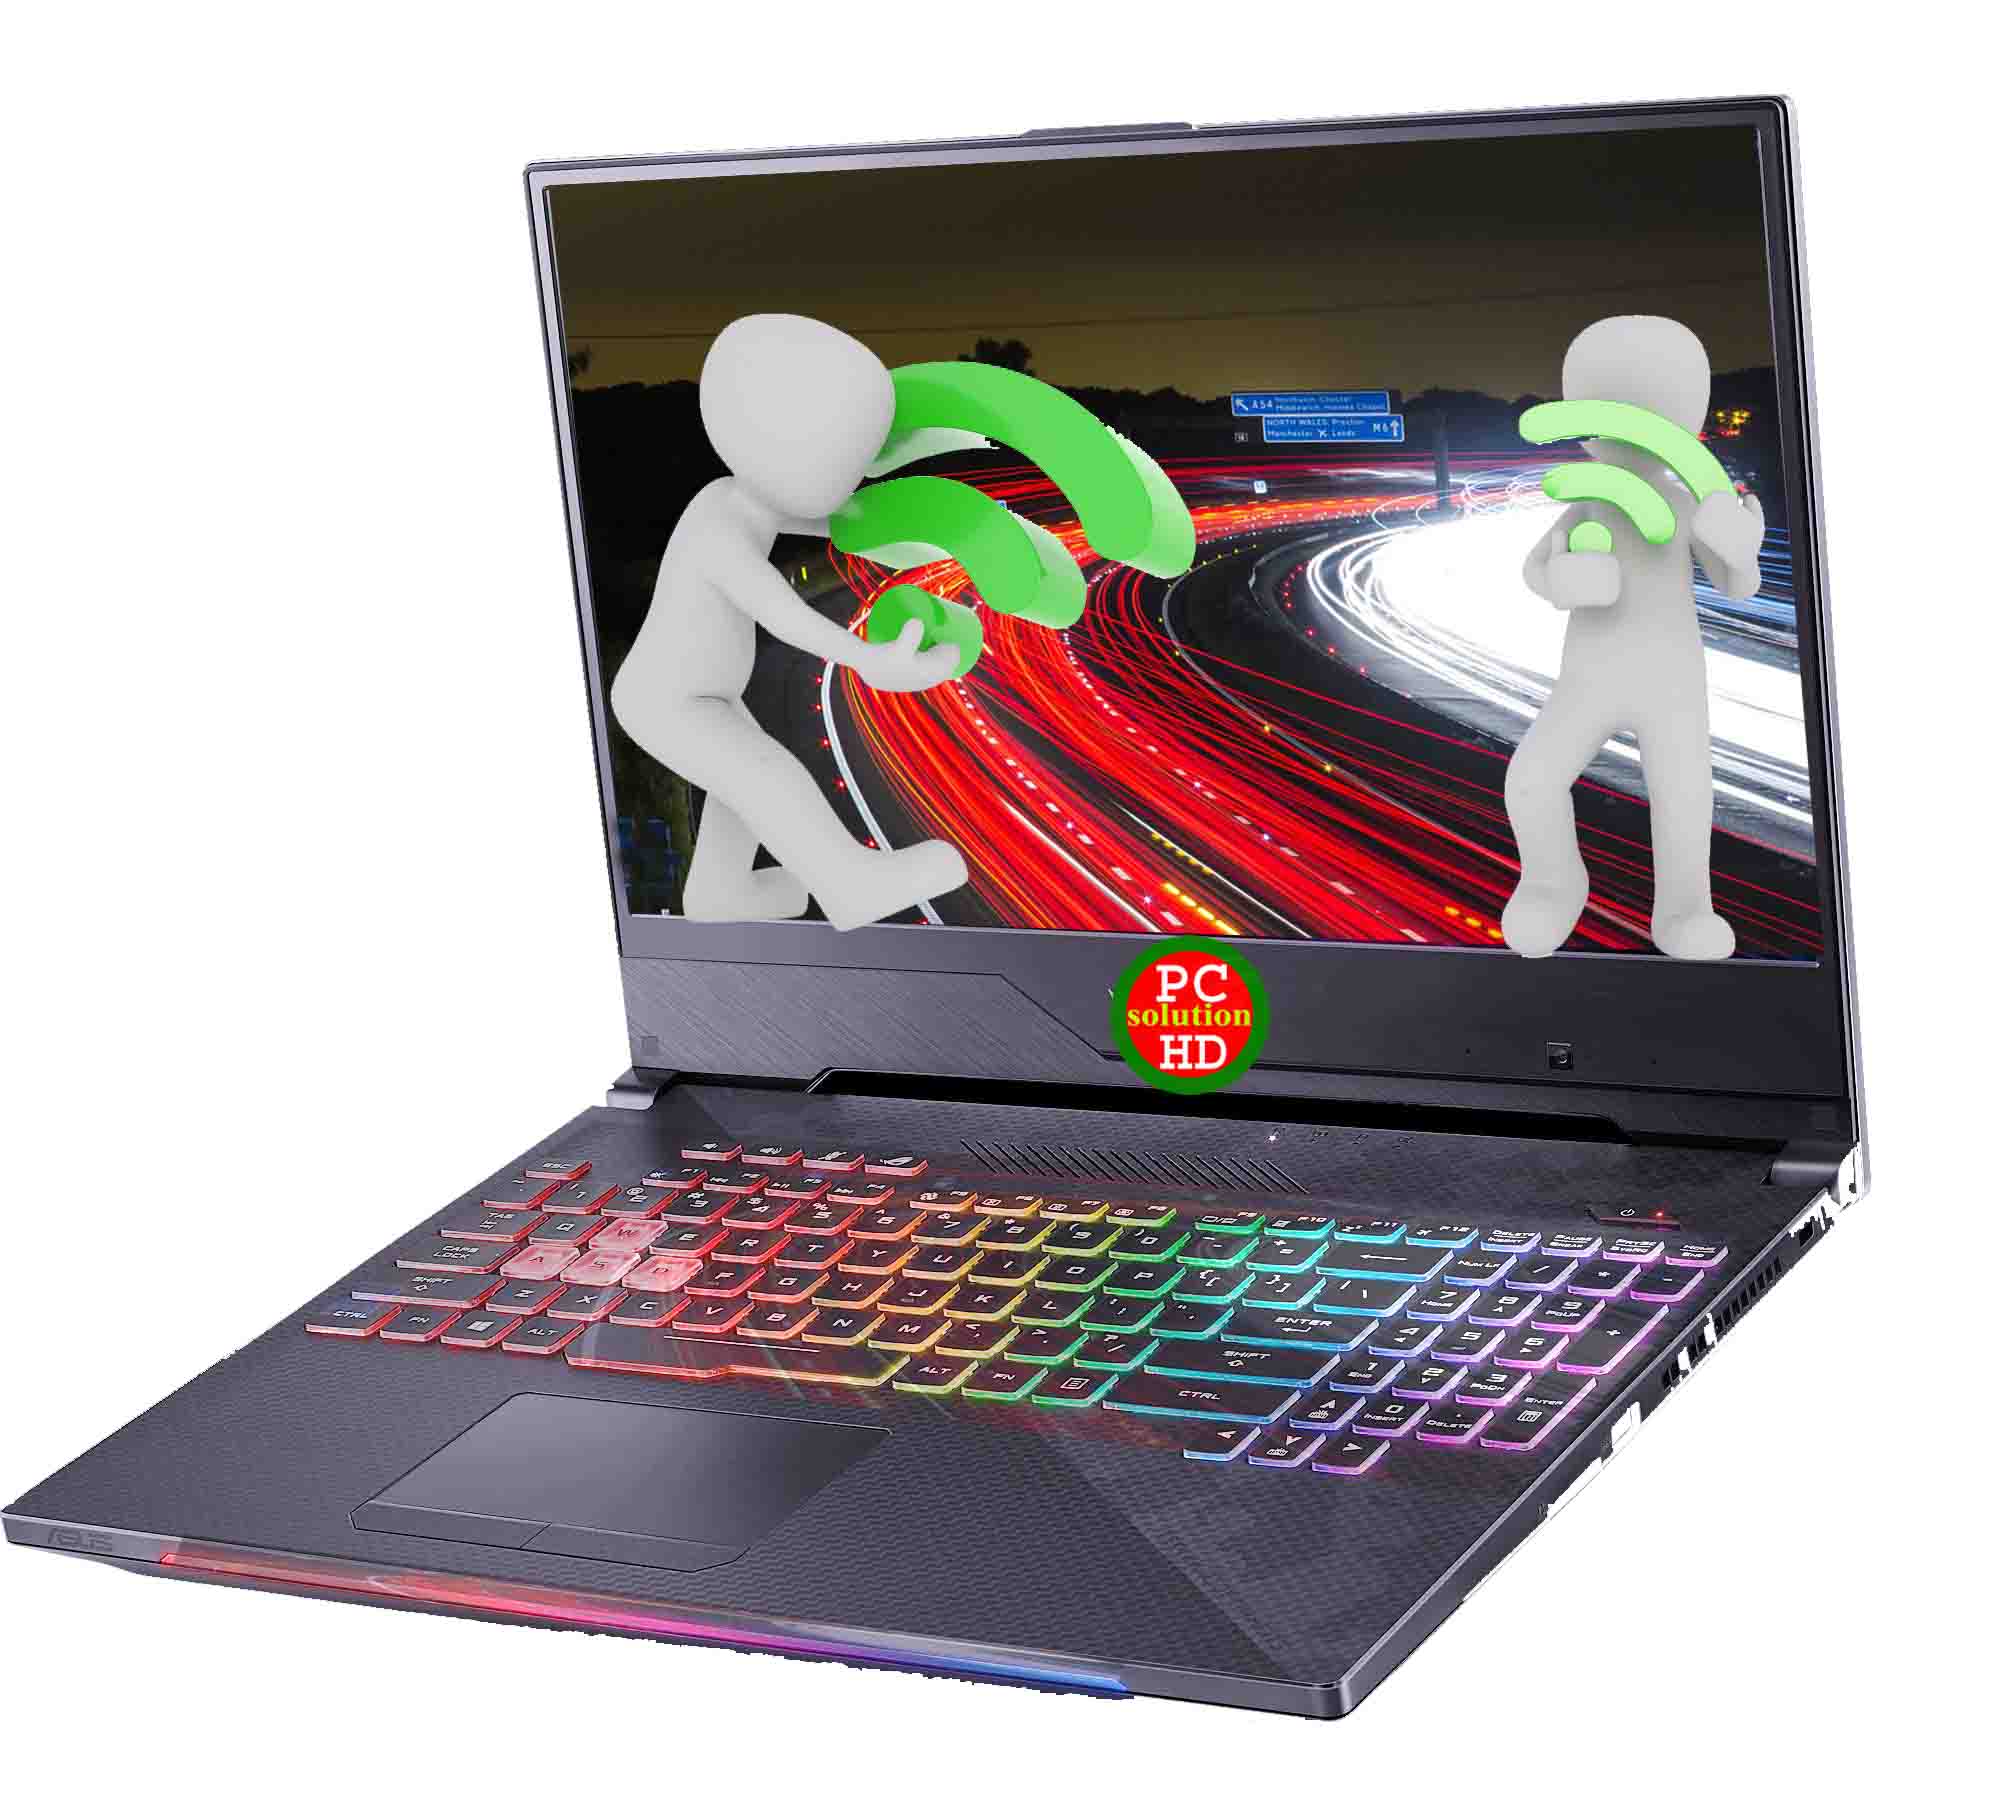 Asus ROG Strix Hero II GL504 Laptop (Core i7 8th Generation) PCsolutionHD.com (Salehin Sohag)